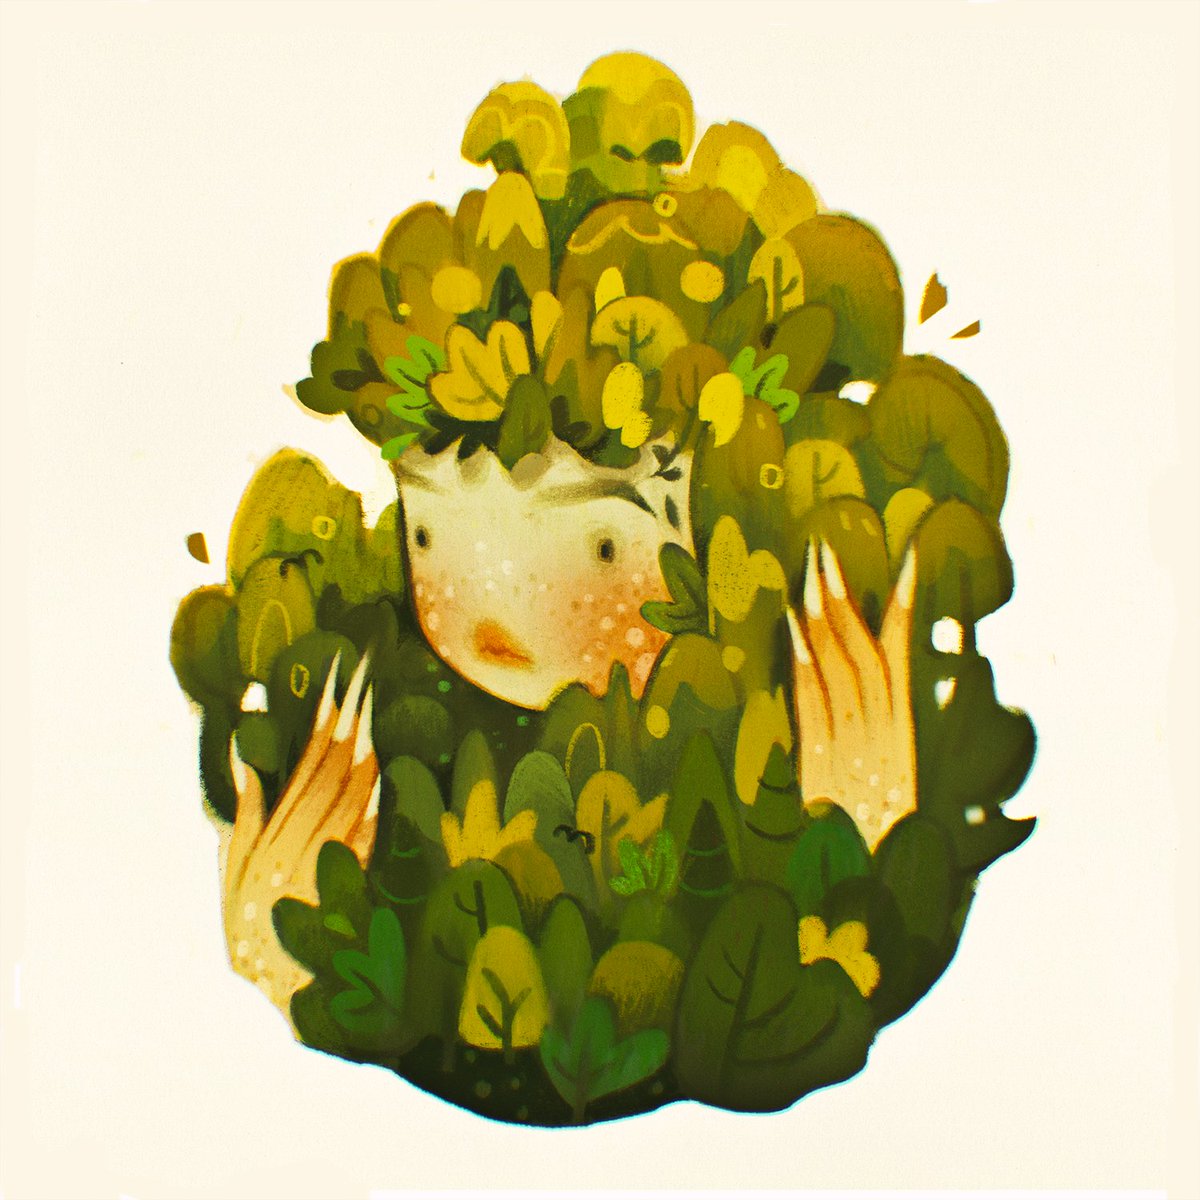 「little broccoli 」|Chantal Horeisのイラスト